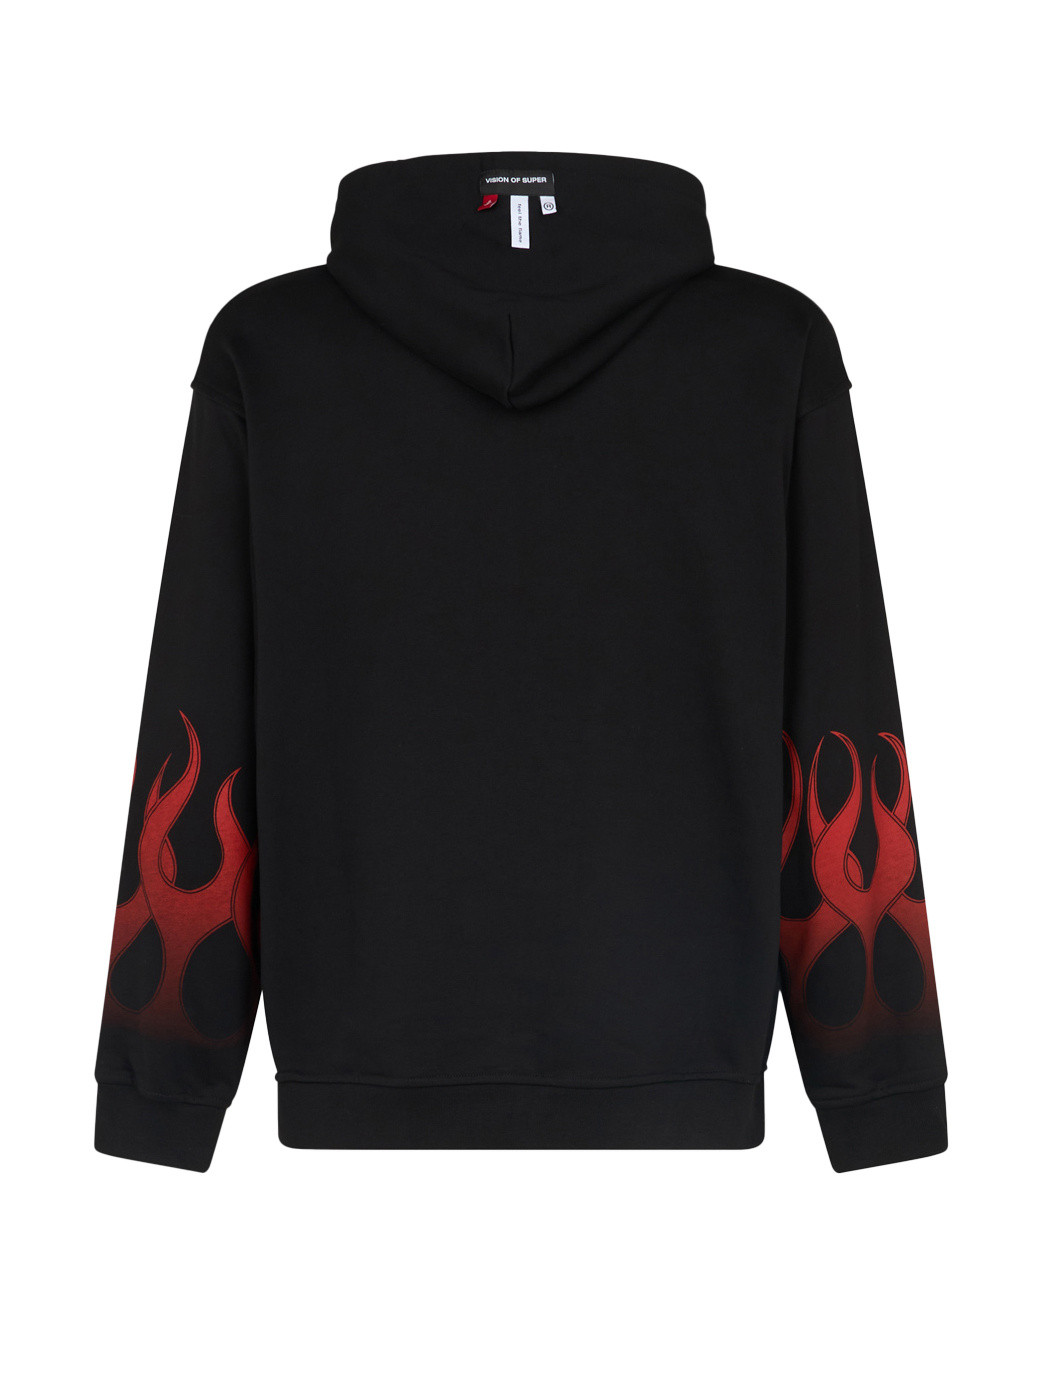 Vision of Super - Sweatshirt with racing flames, Black, large image number 4